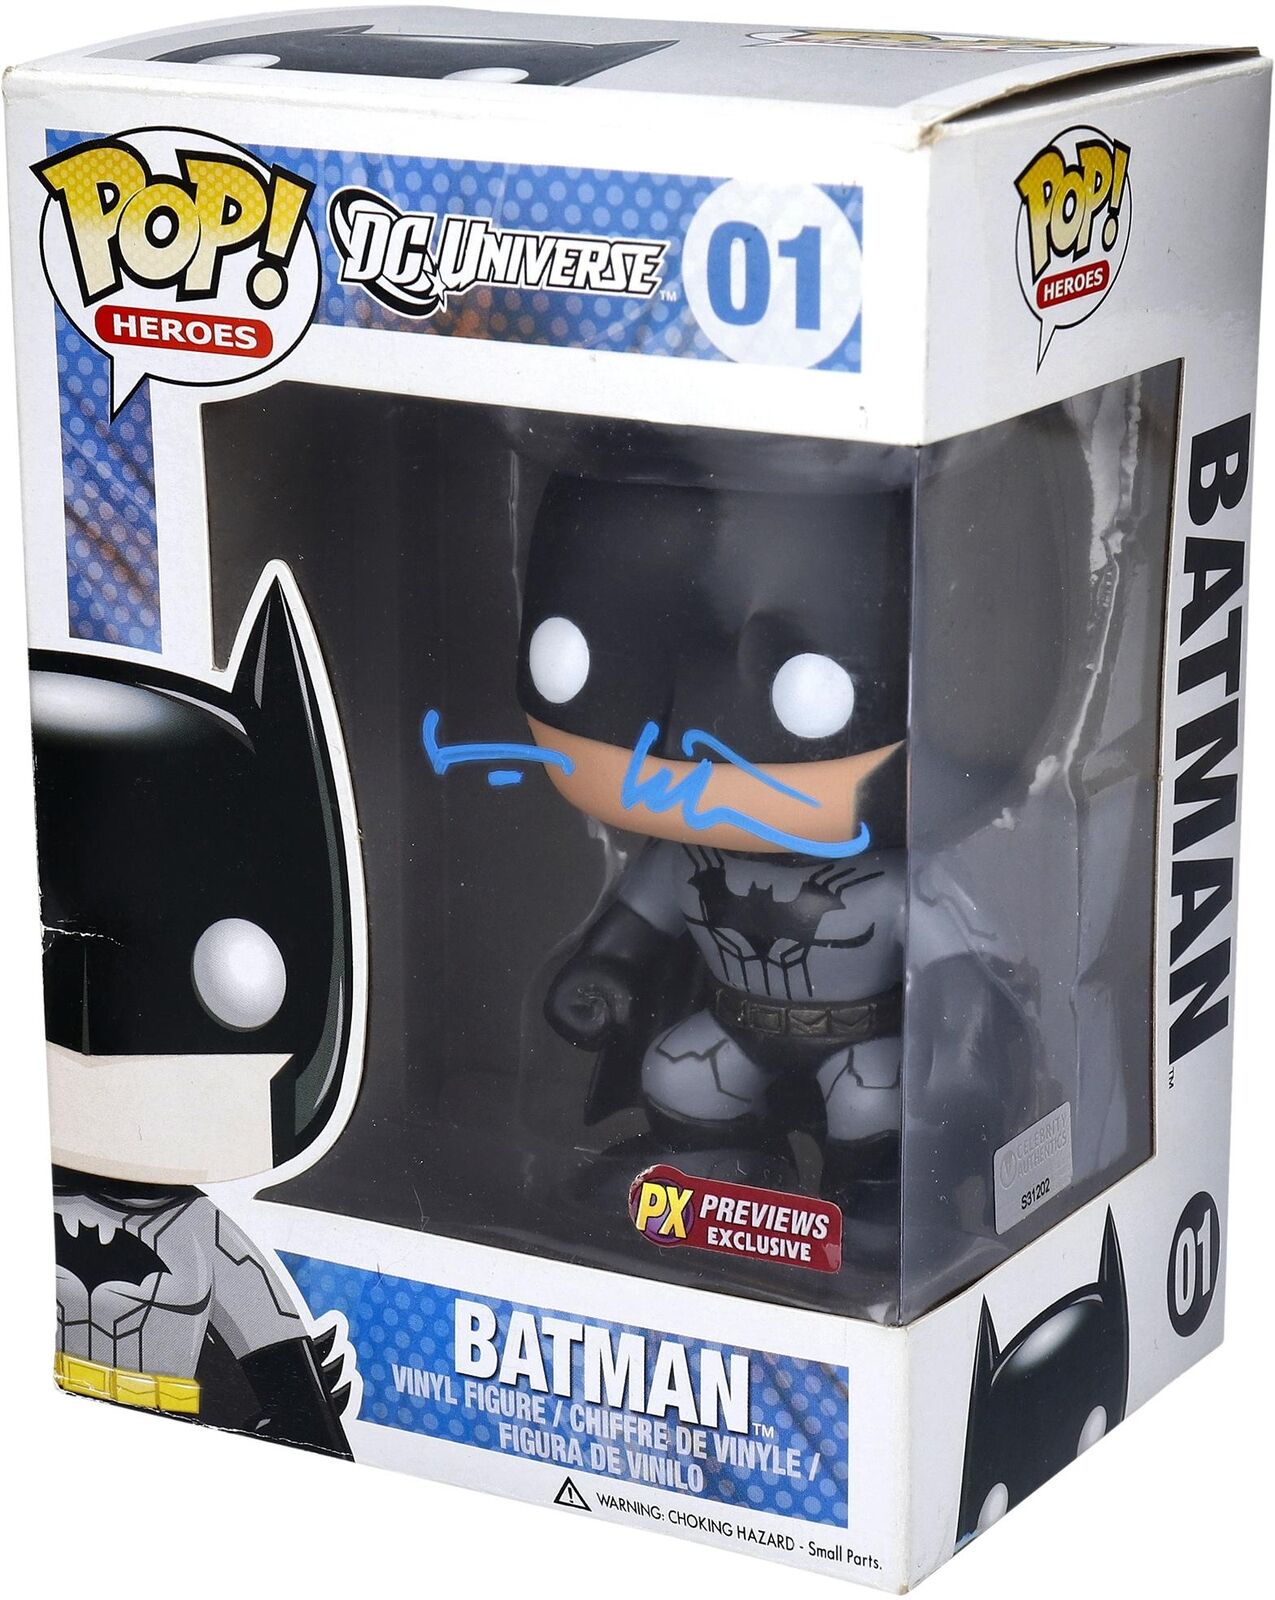 Val Kilmer Autographed Batman DC Universe #1 Funko Pop Figurine